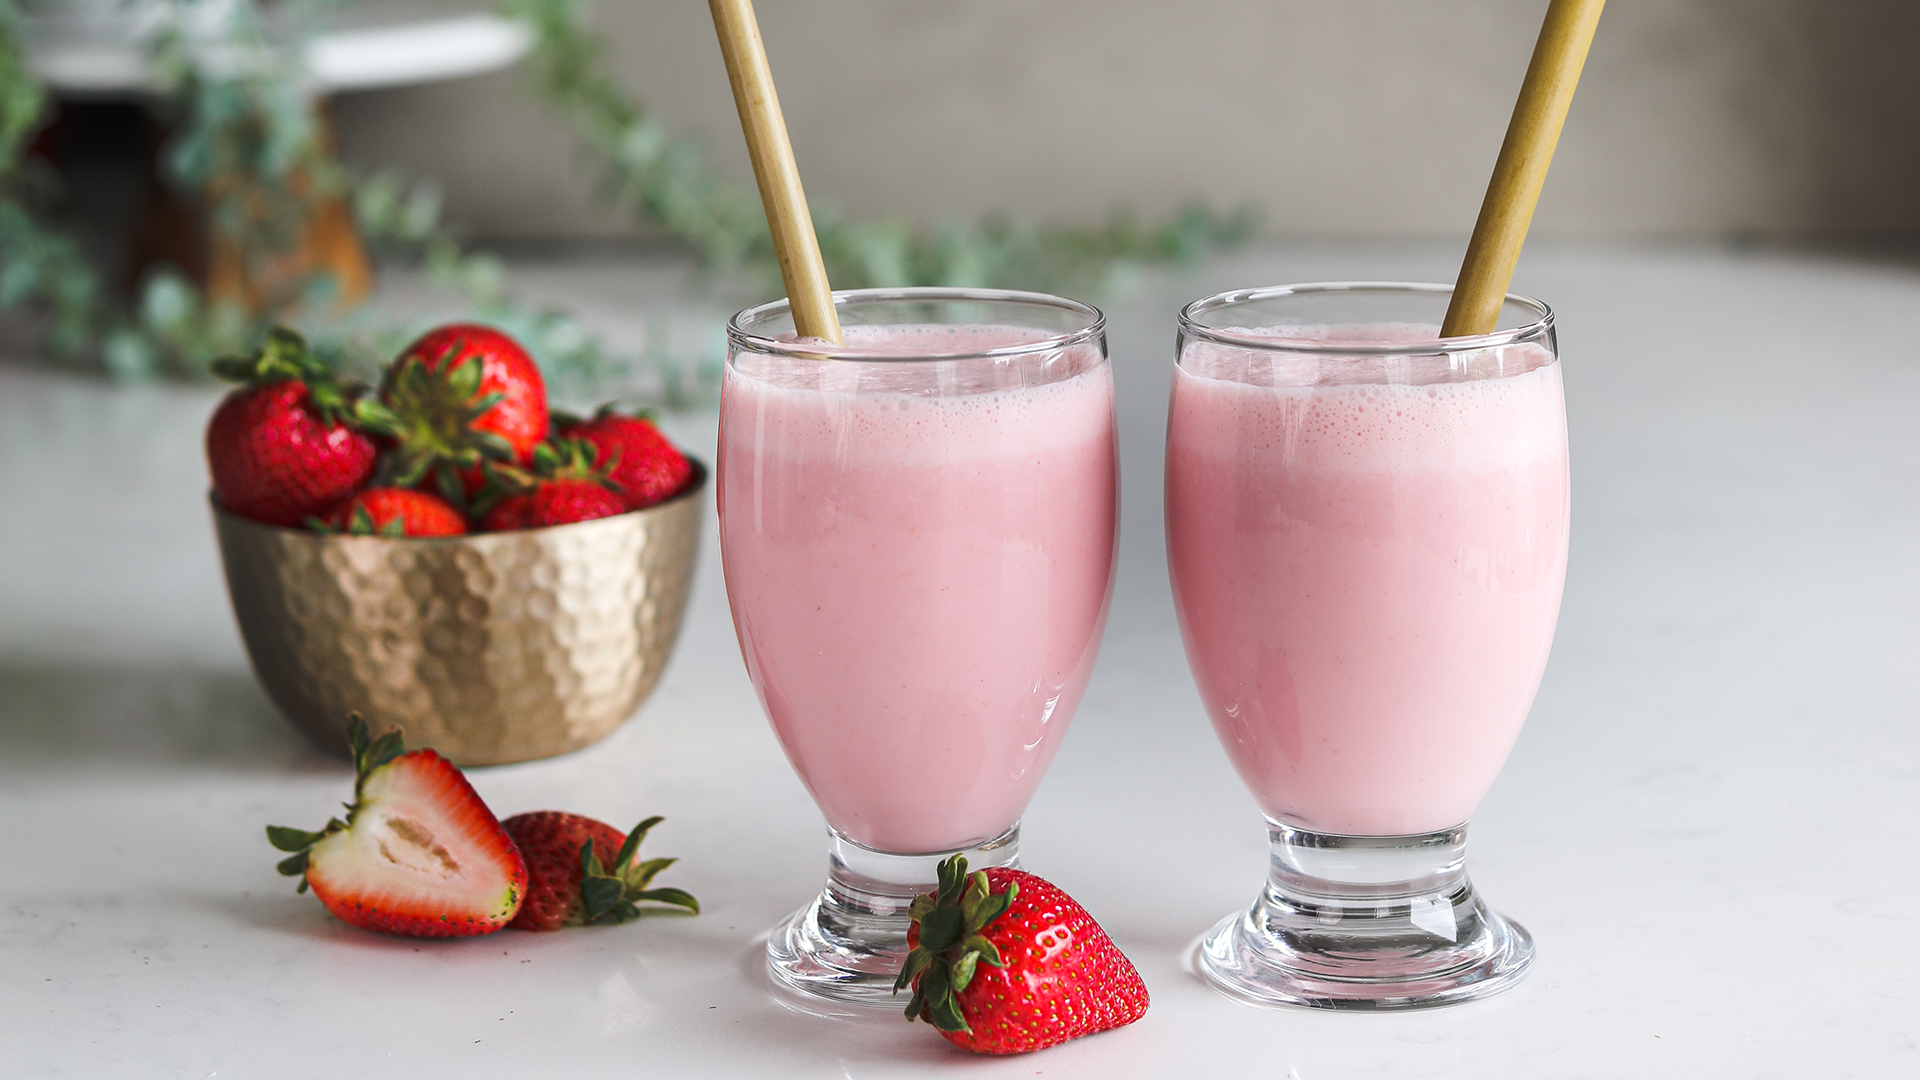 Creamy and delicious strawberry lassi drink